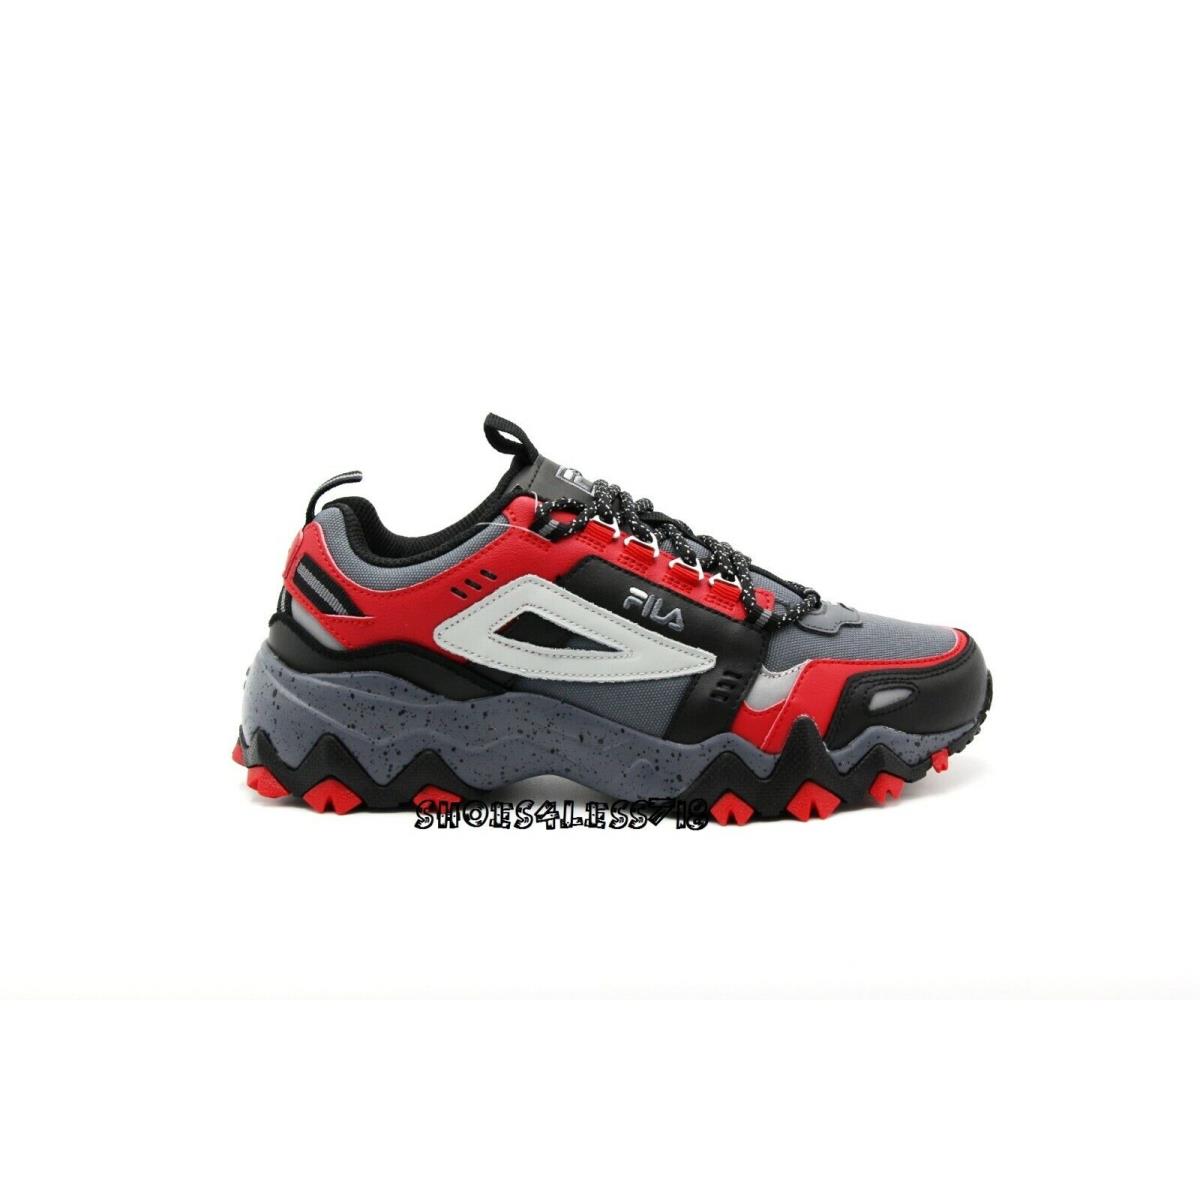 2020 Men Fila Oakmont Trail Black Red Gray Hiking Casual Lace UP Sneakers - Black